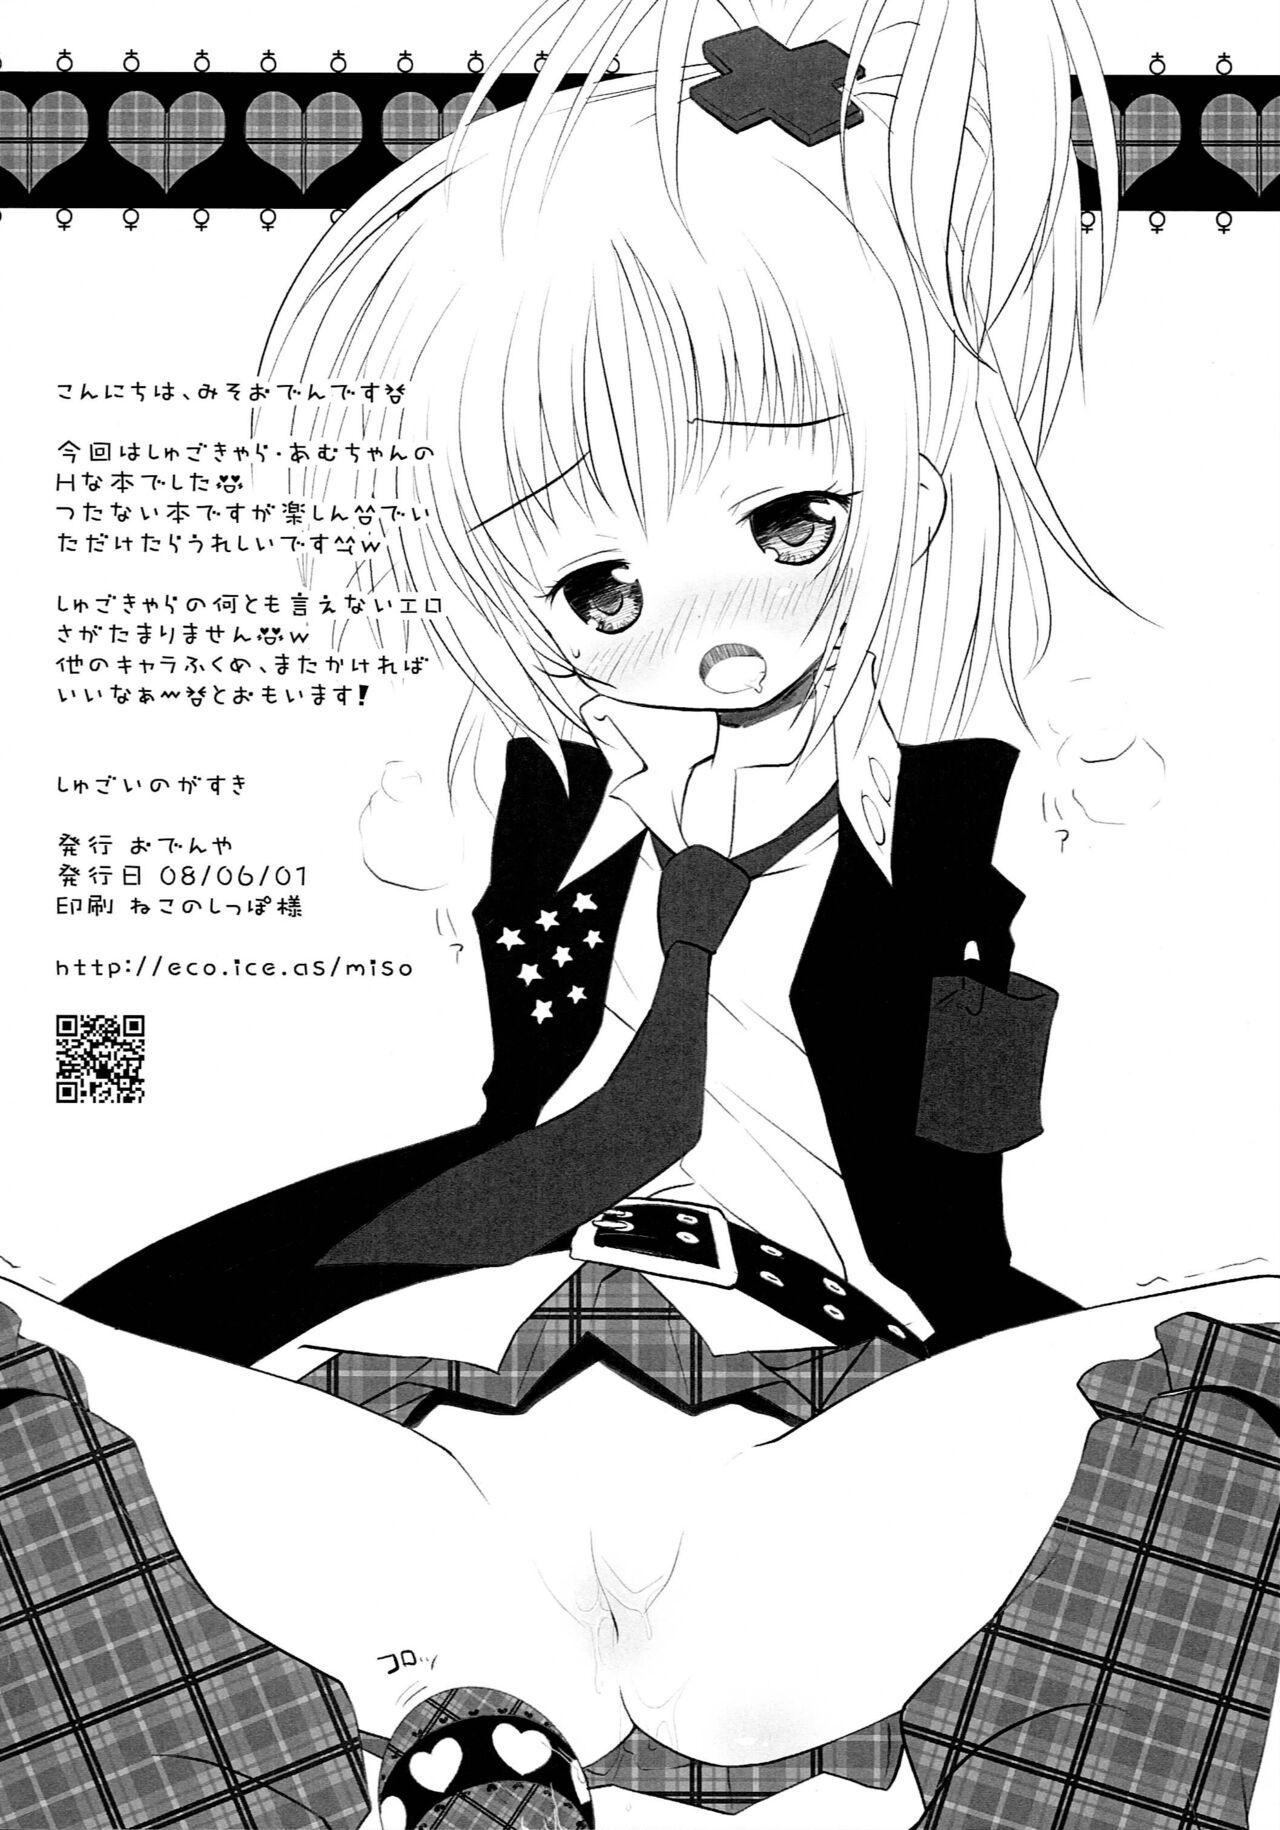 Longhair Shugoi no ga Suki - Shugo chara Tiny - Page 13